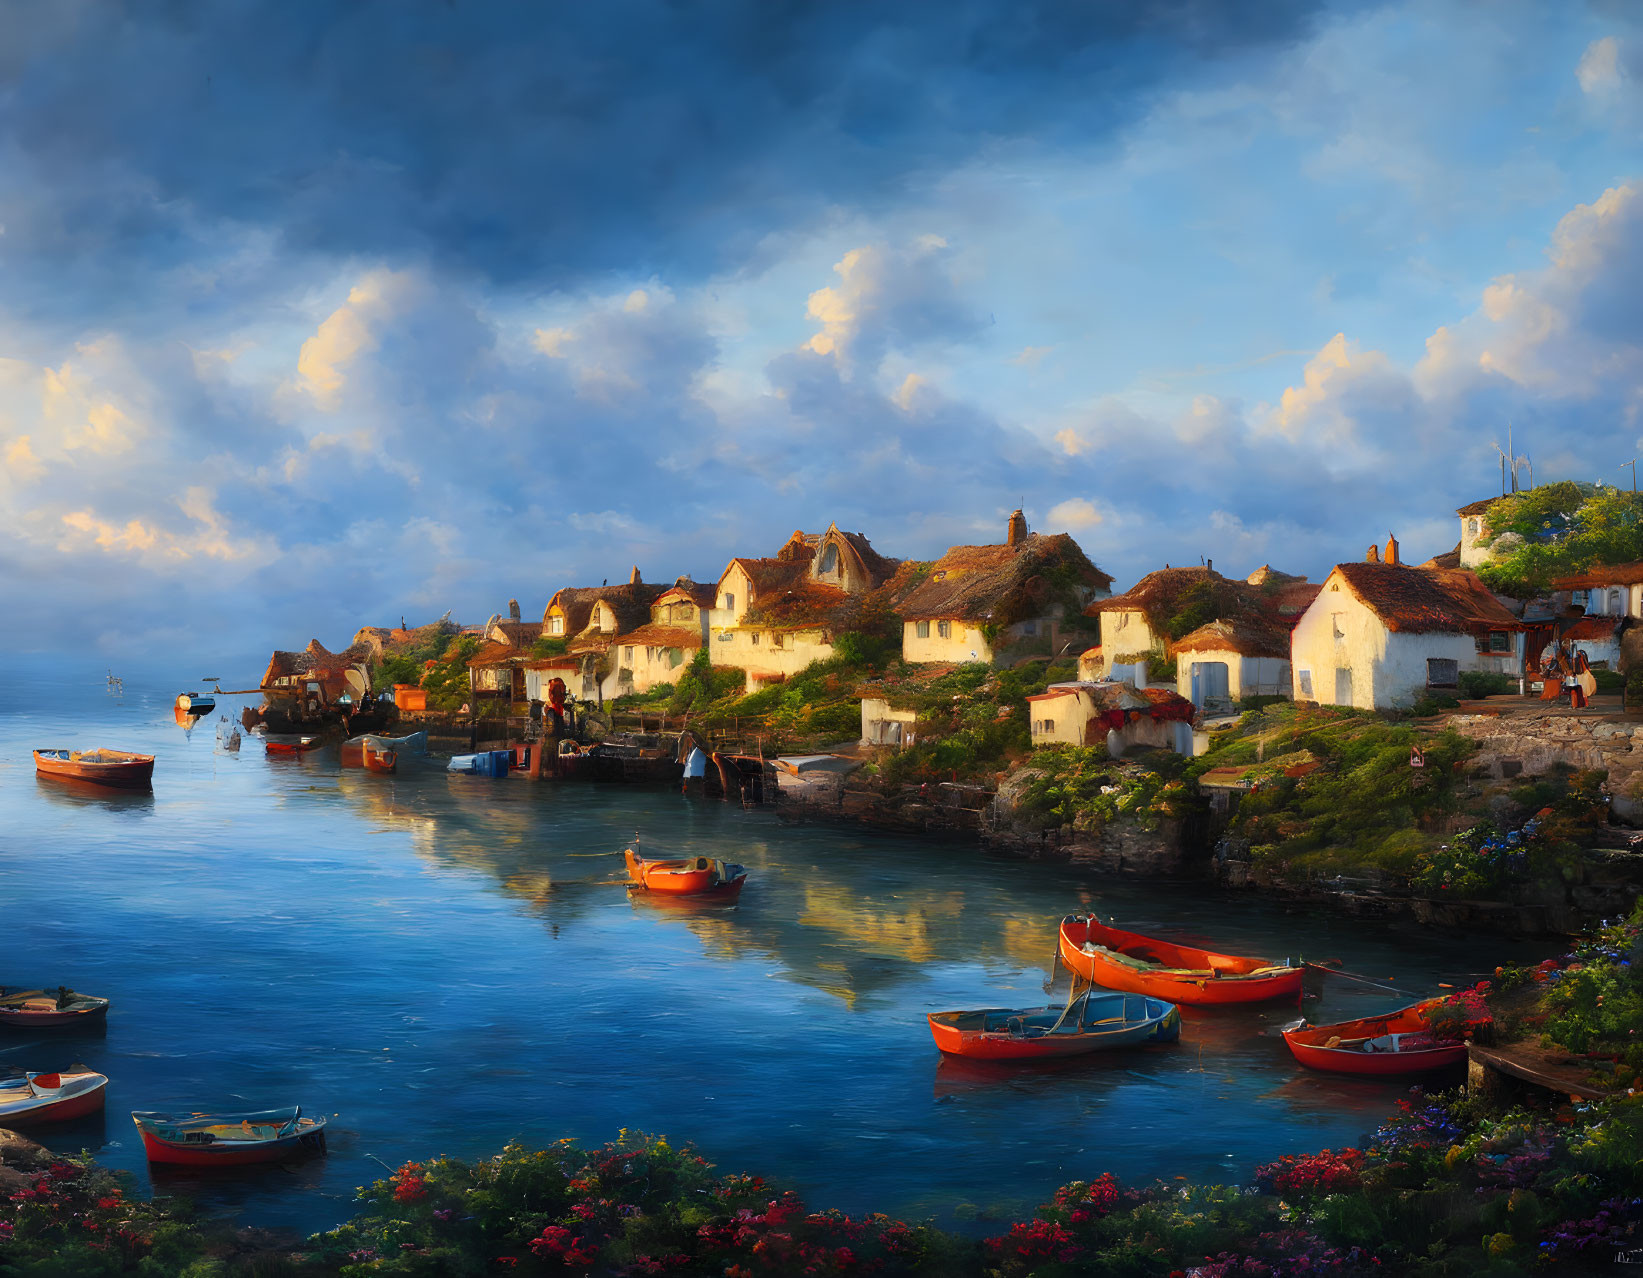 Tranquil coastal village: sunset, quaint houses, docked boats, vibrant flowers.